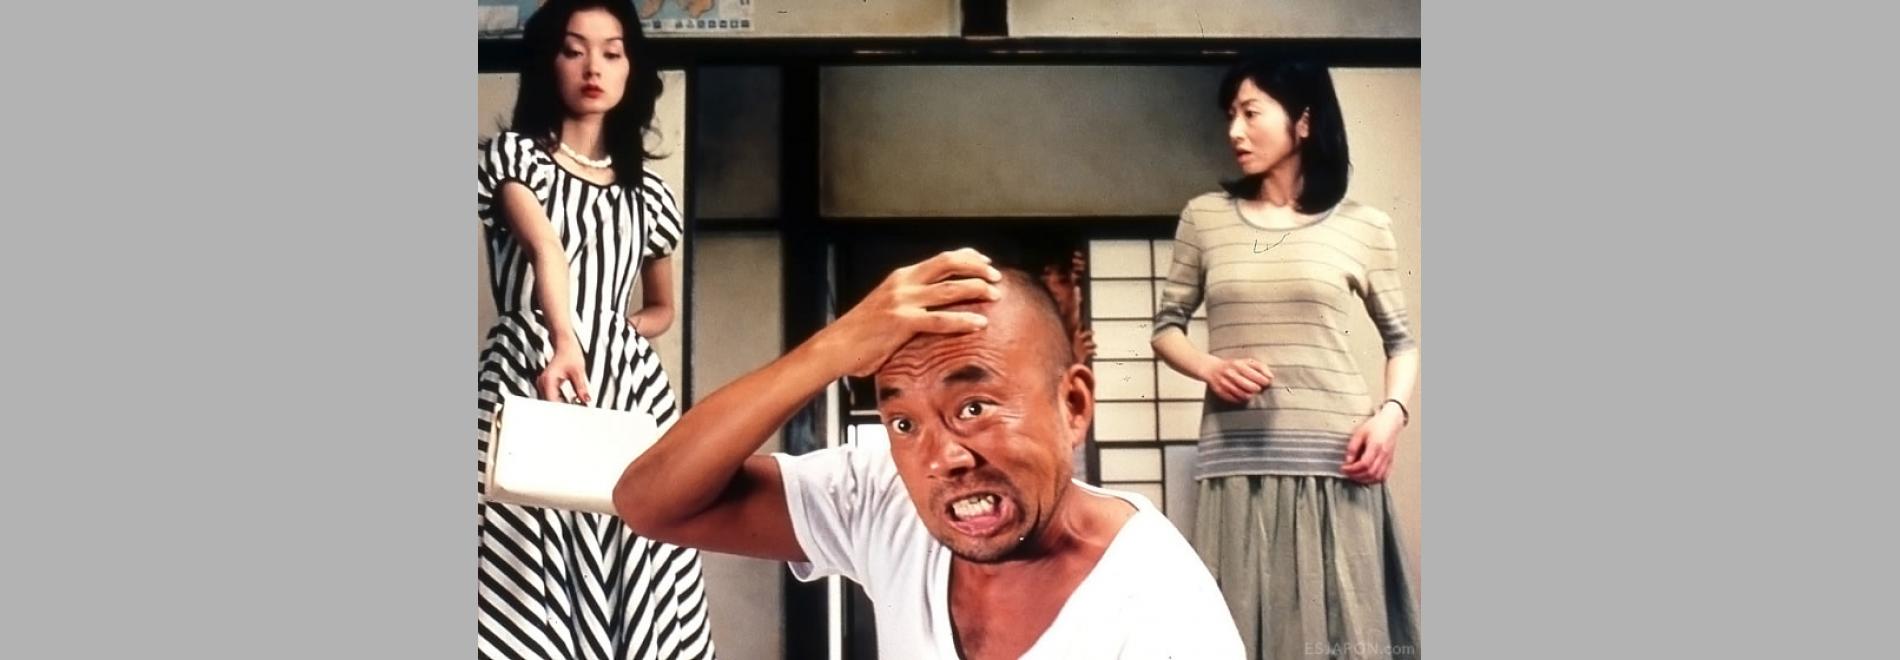 Sanmon yakusha / Actor secundari (Kaneto Shindô, 2000)